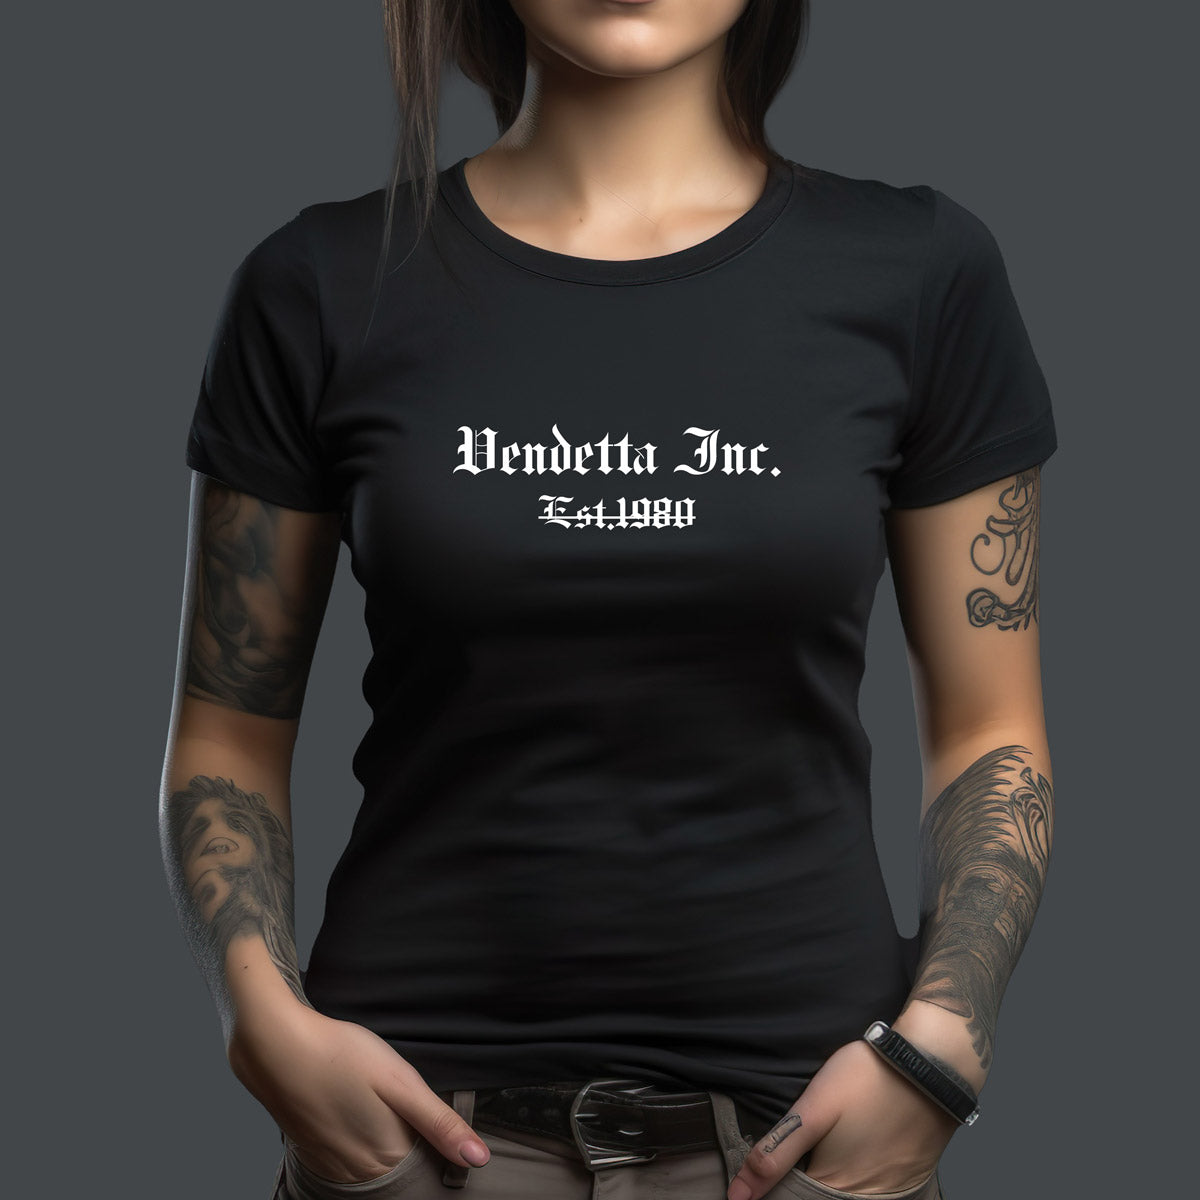 Vendetta Inc. Damen Shirt Skull Rose Dyed schwarz 00024